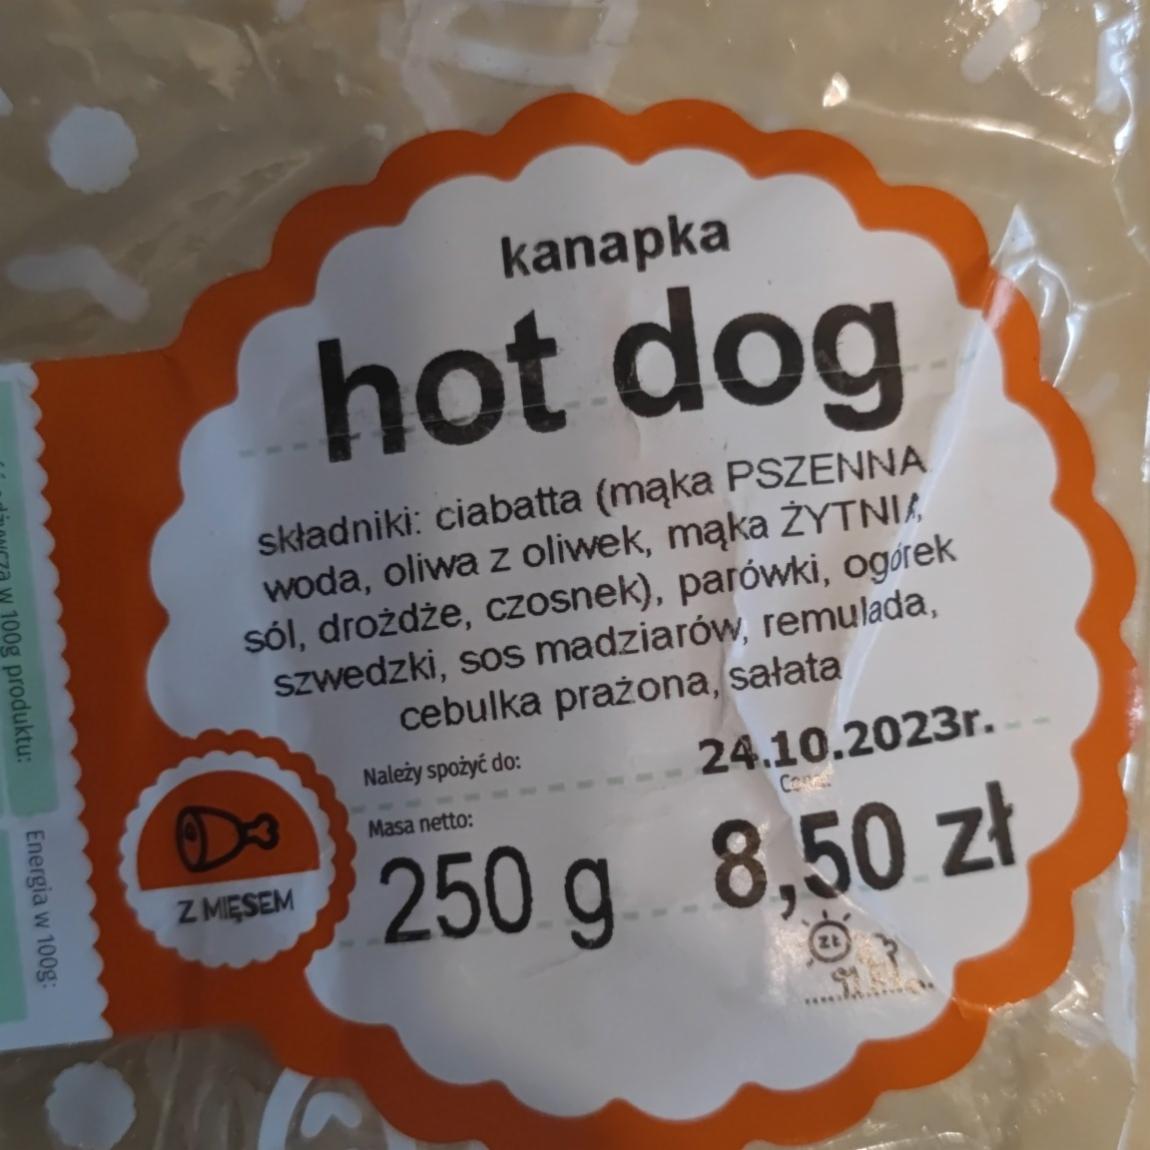 Zdjęcia - Kanapka hot dog Ślimak